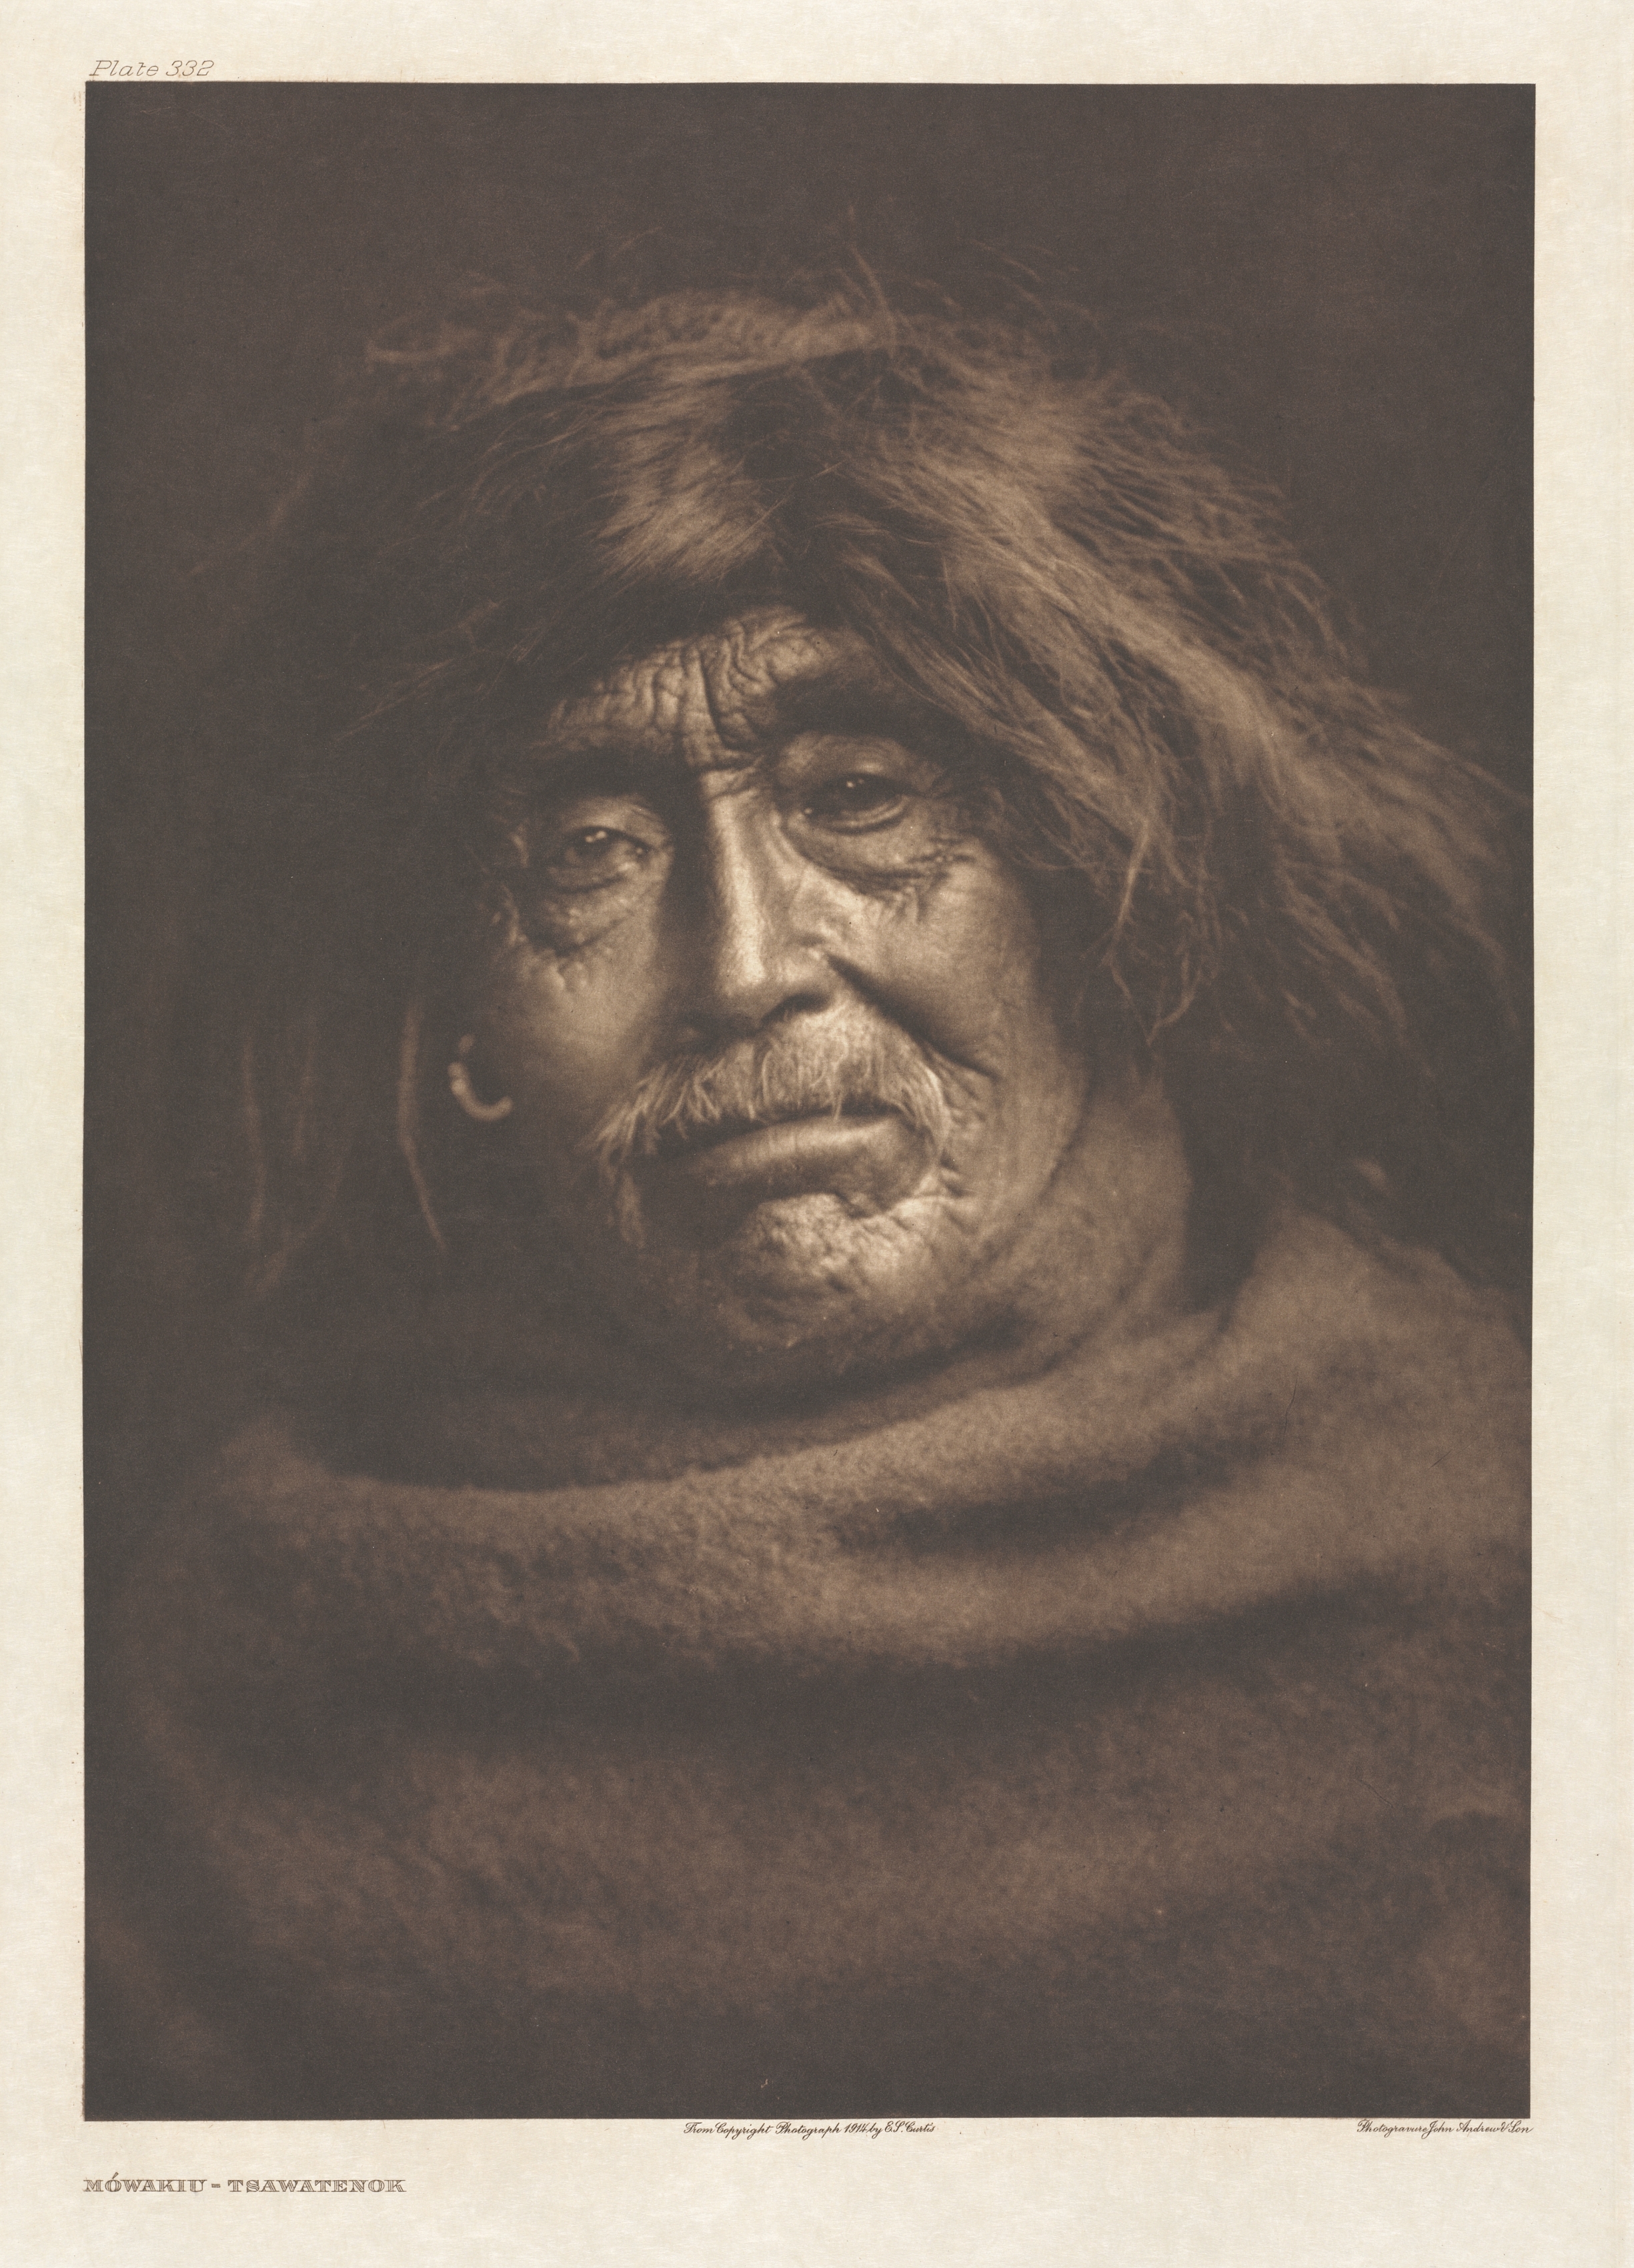 Portfolio X, Plate 332: Mówakiu - Tsawatenok